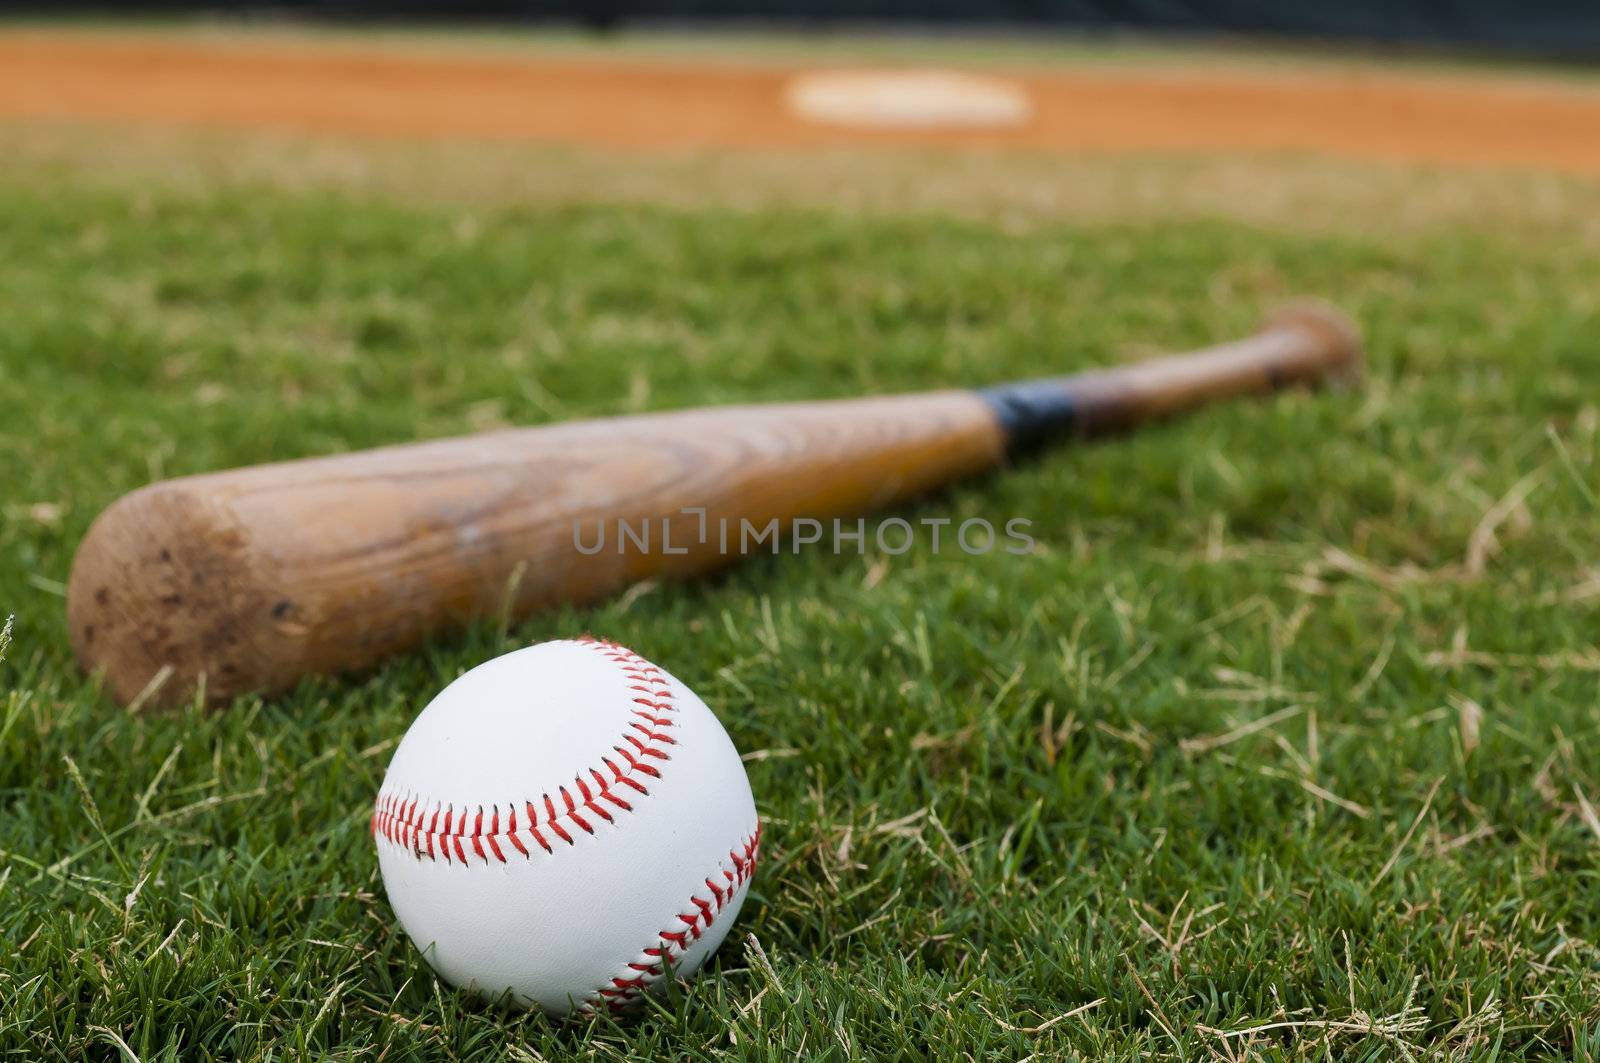 Baseball and Bat on Field by dehooks